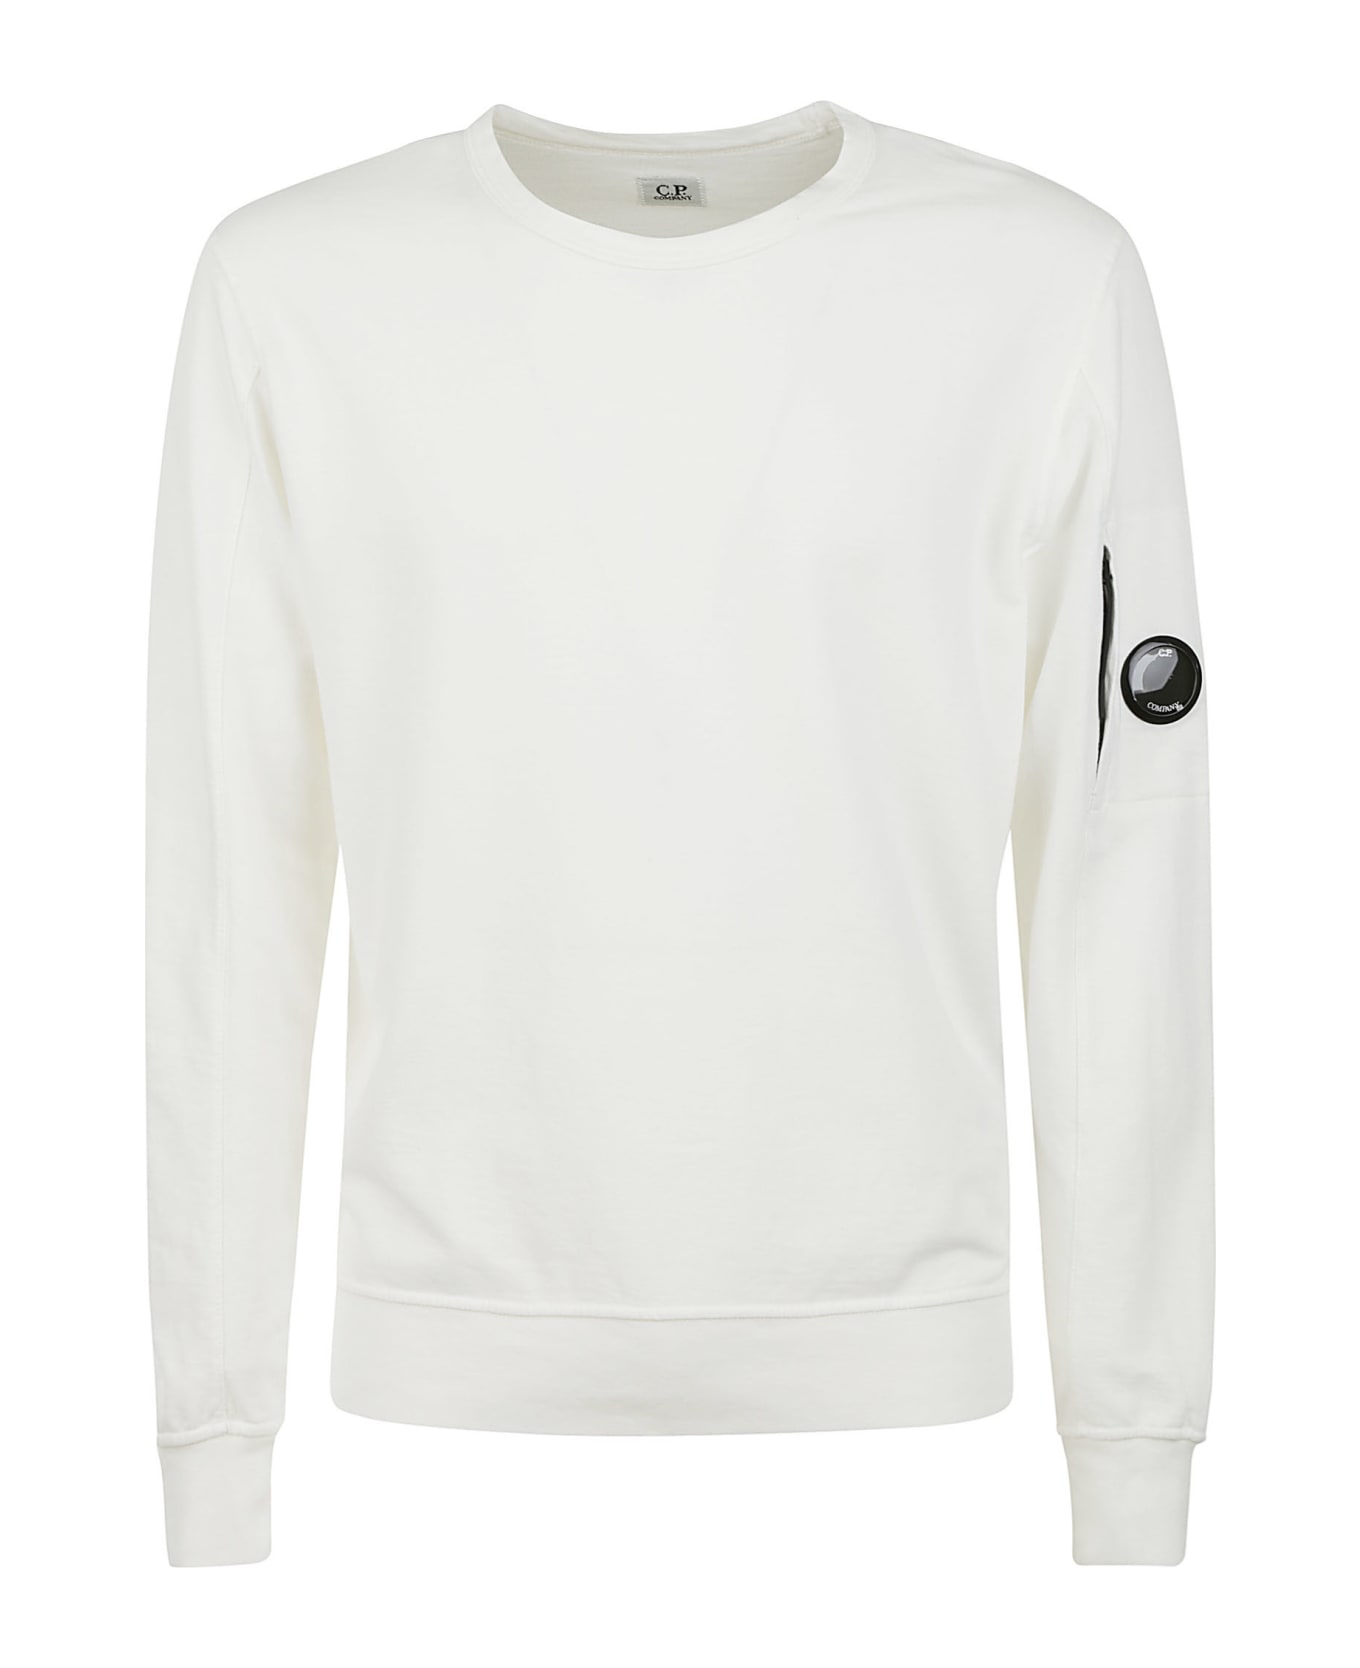 C.P. Company Light Fleece Crew Neck Sweatshirt - Bianco